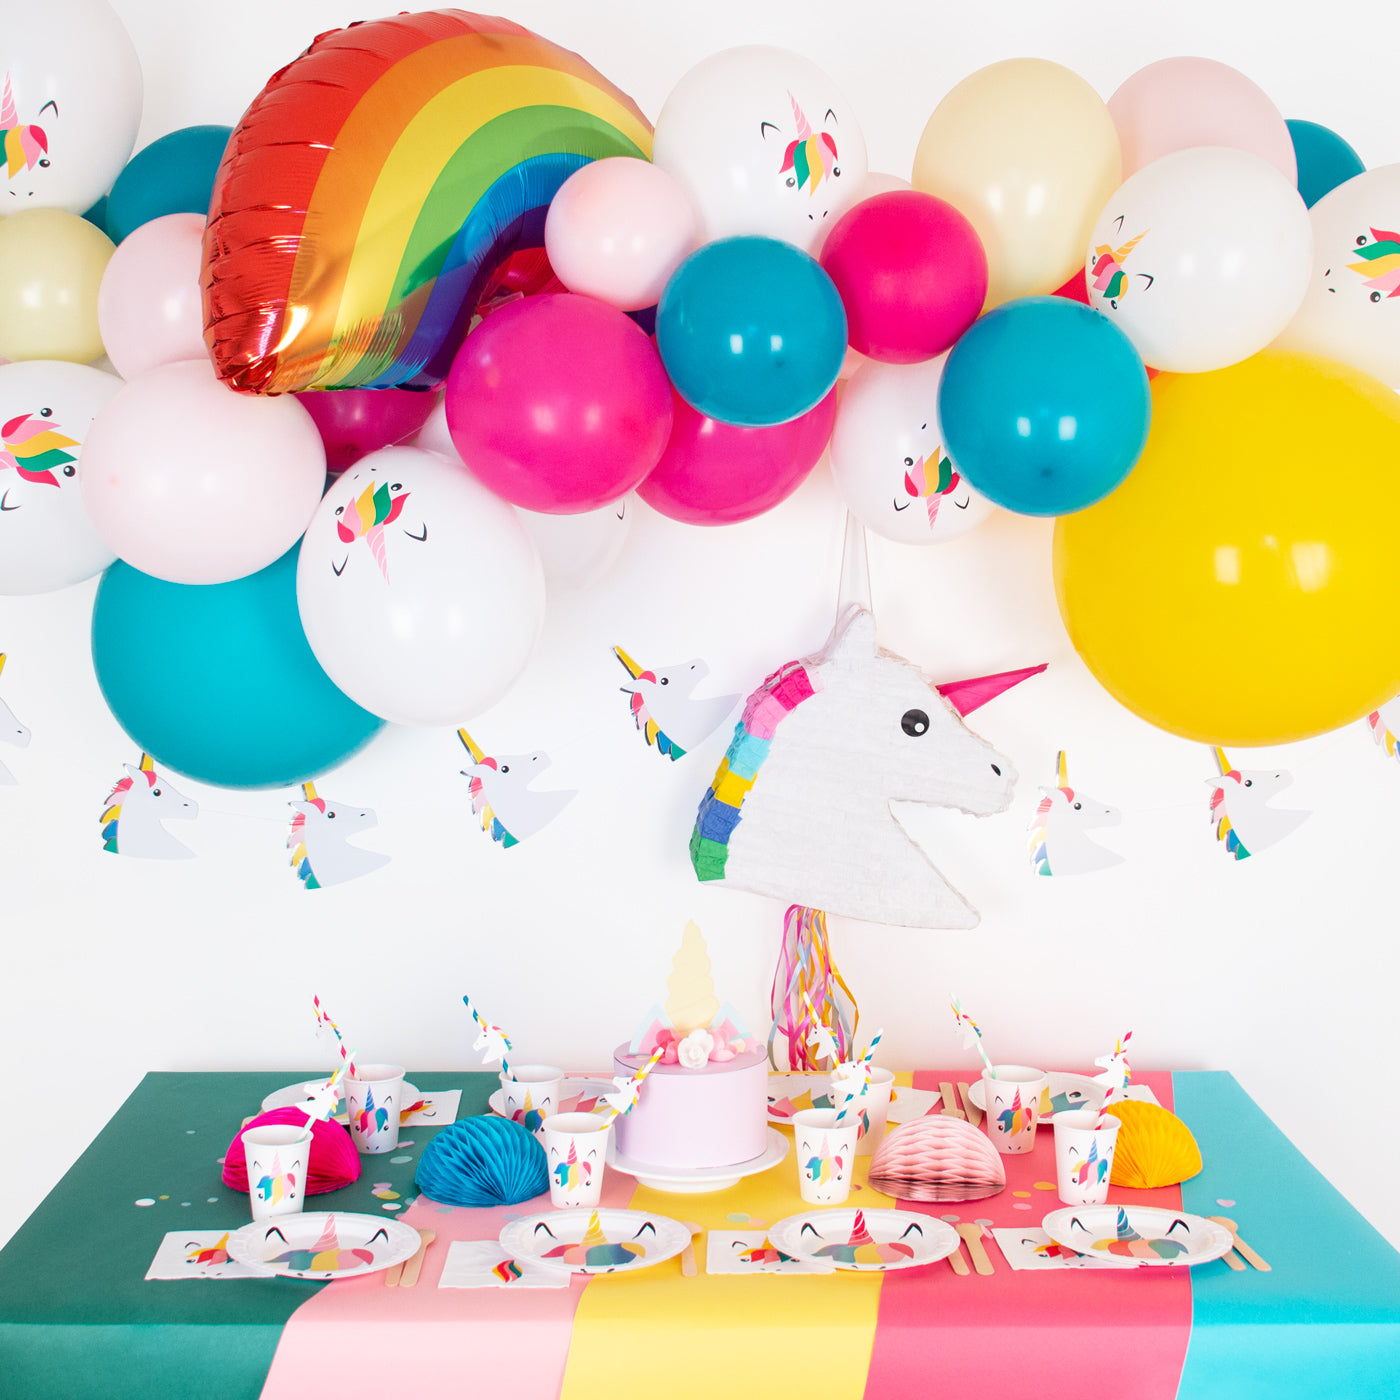 Organiser un anniversaire licorne - Sparklers club